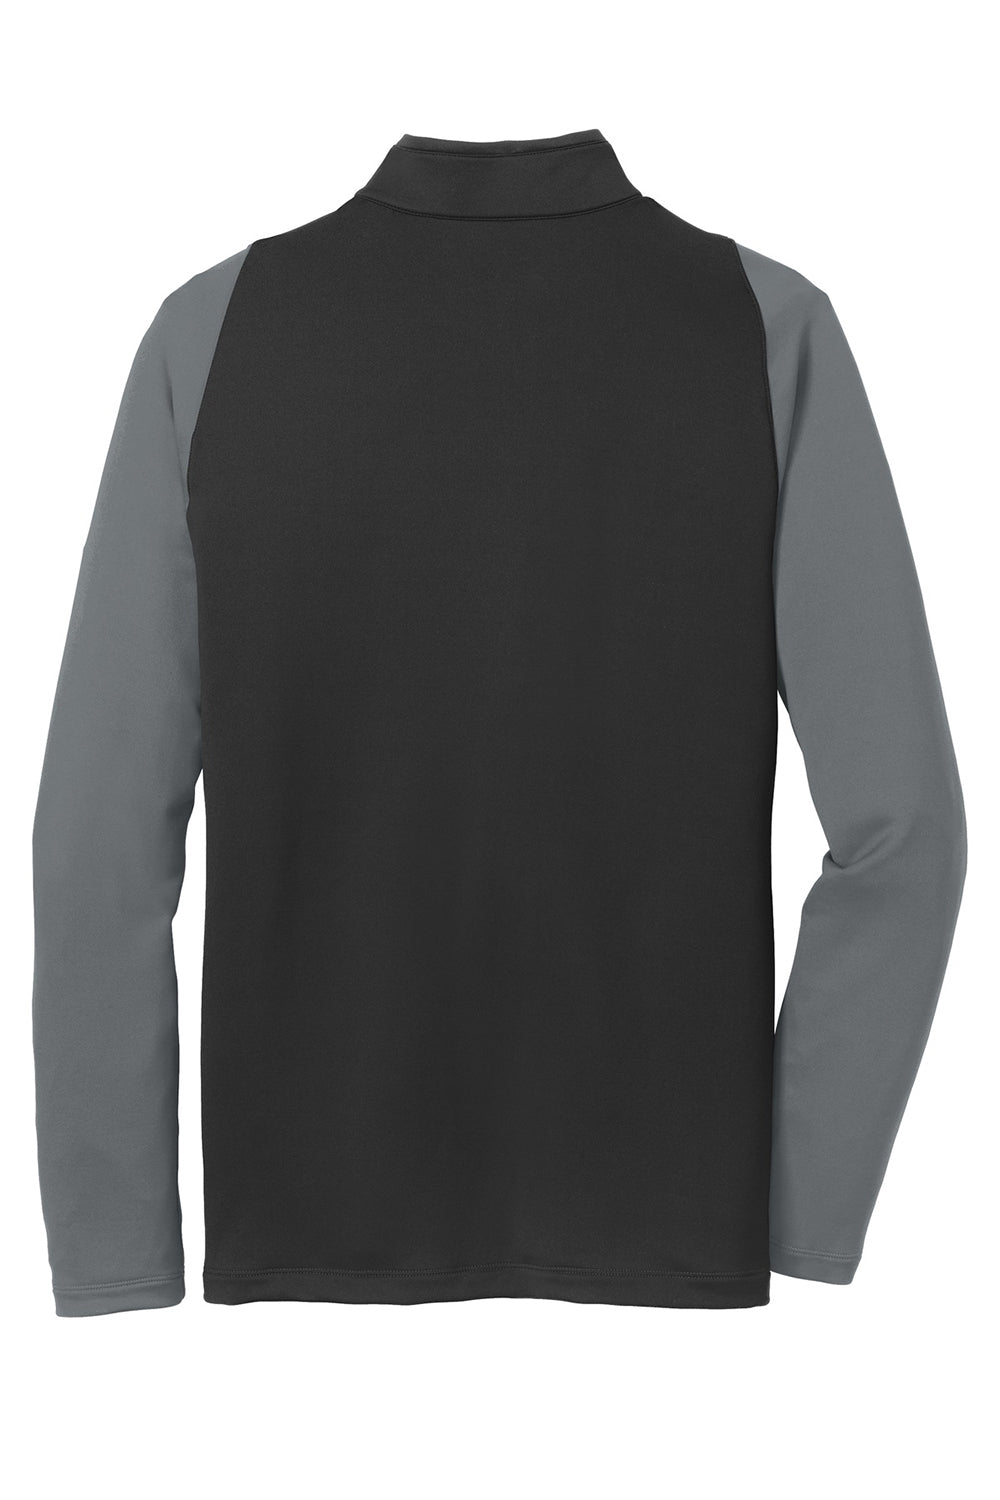 Nike 779795 Mens Dri-Fit Moisture Wicking 1/4 Zip Sweatshirt Black/Dark Grey Flat Back